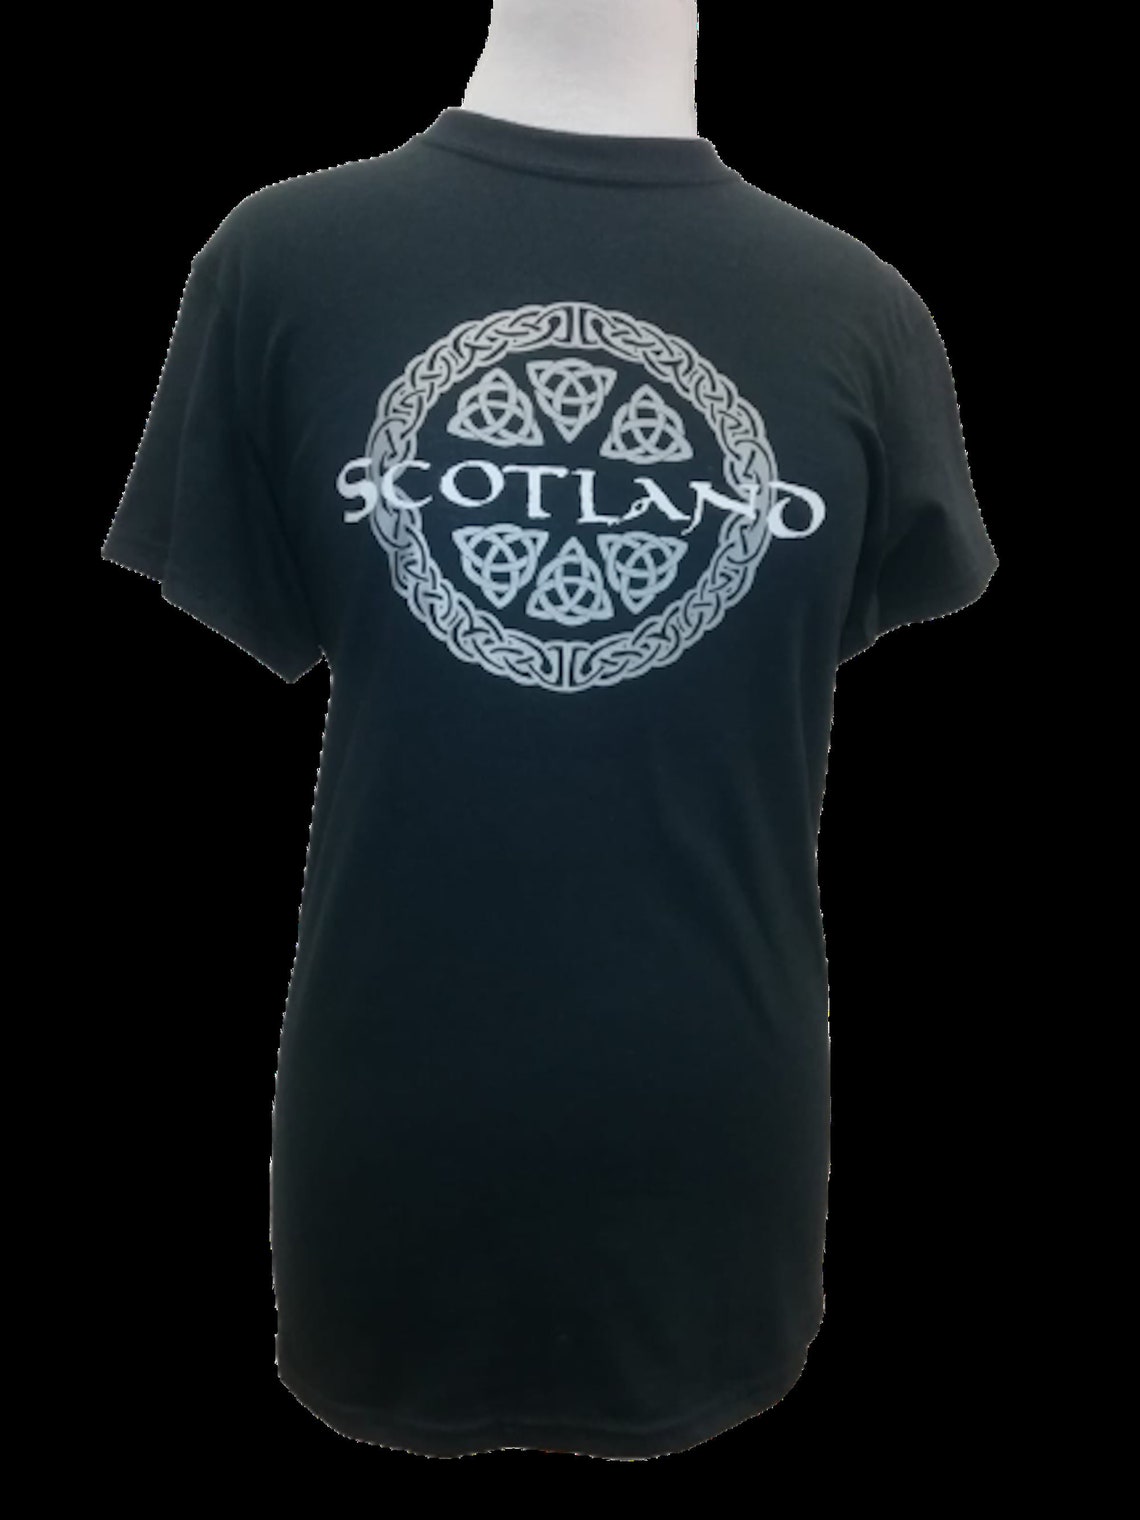 Unisex Adults Scotland T-shirt / Celtic Design | Etsy